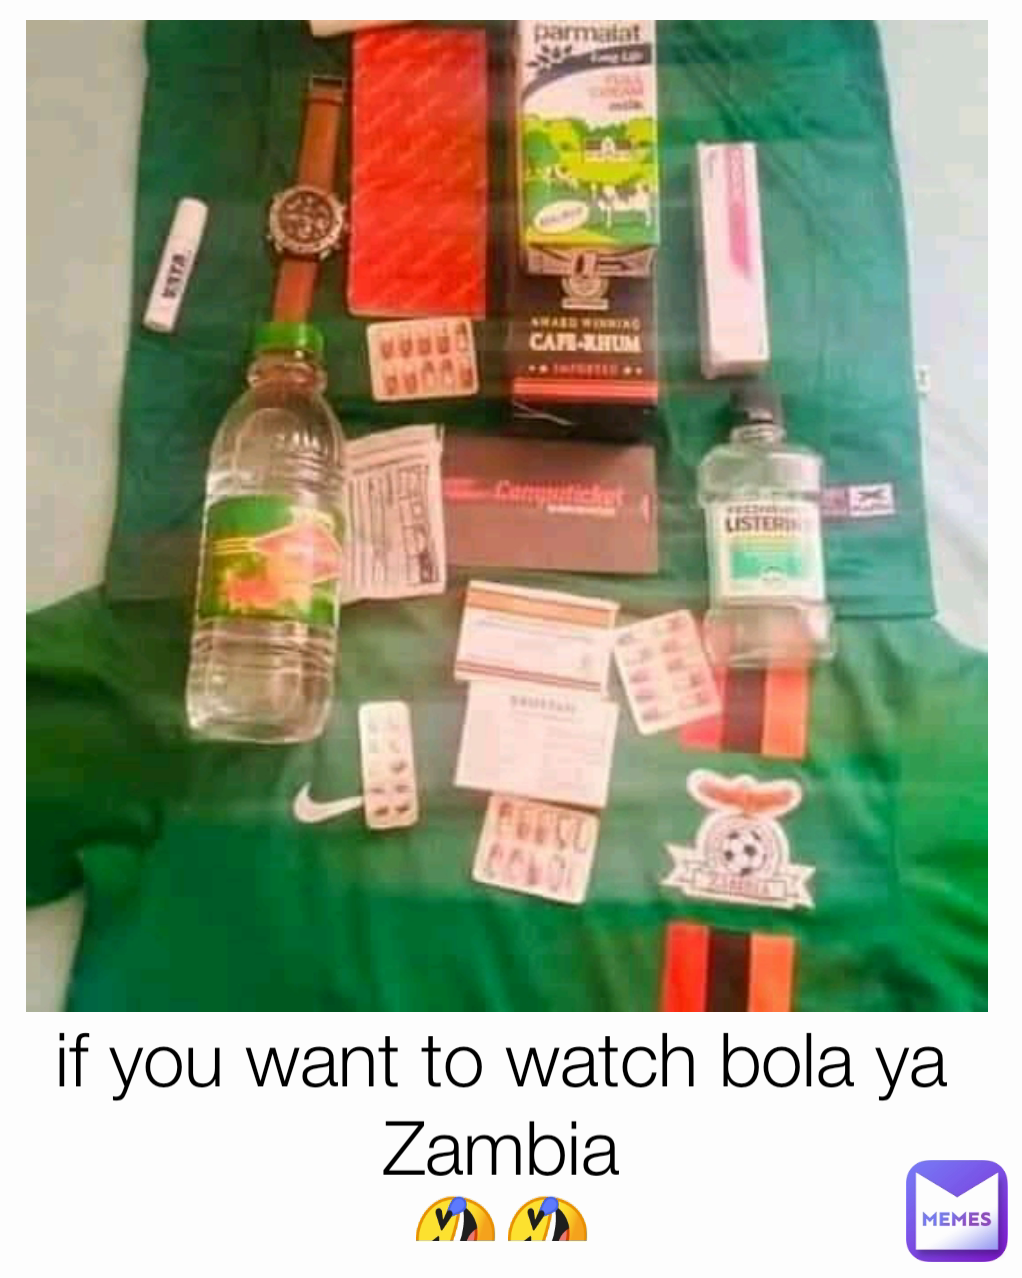 if you want to watch bola ya Zambia
🤣🤣